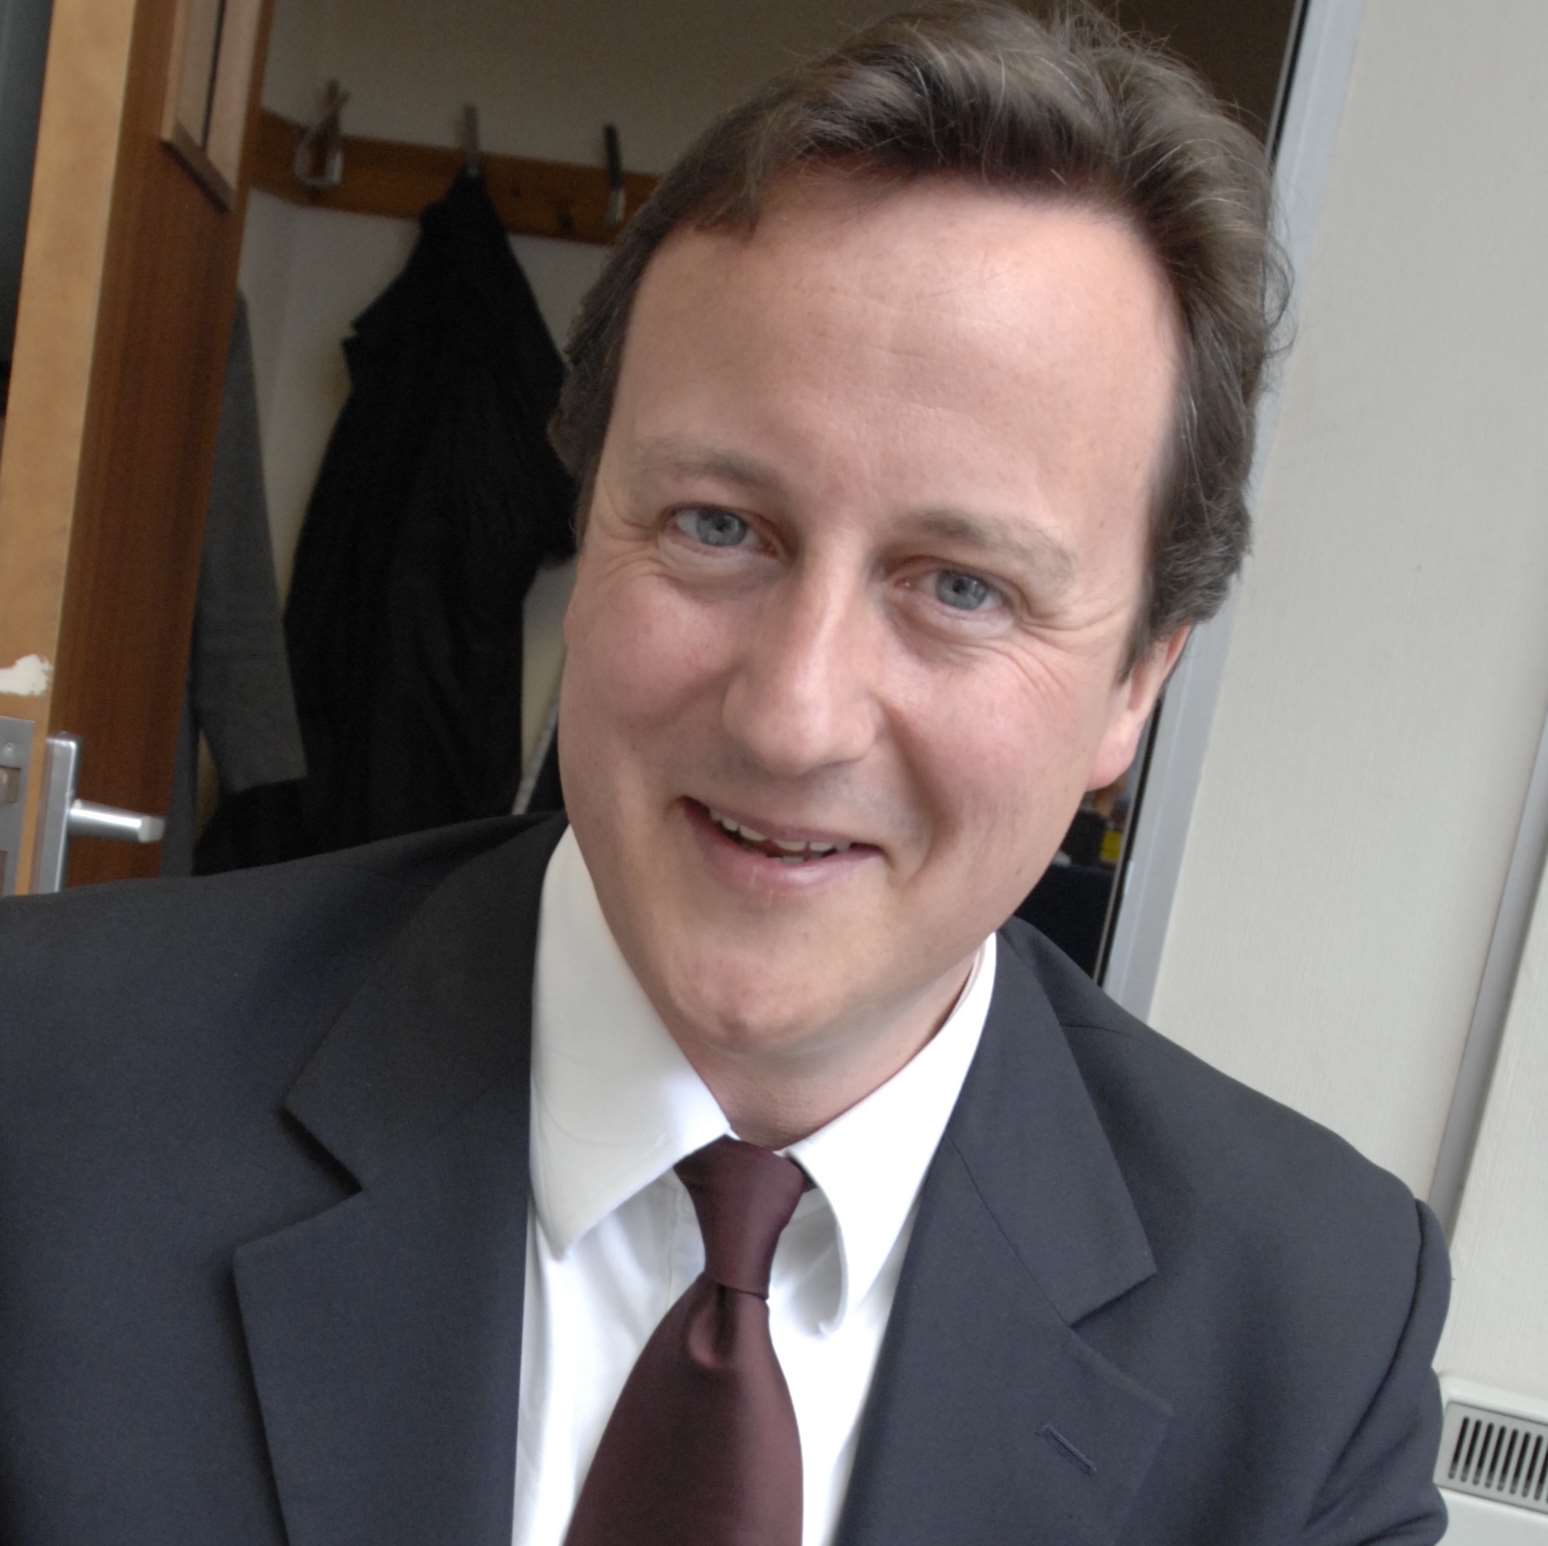 Prime Minister David Cameron has pledge 500 free schools